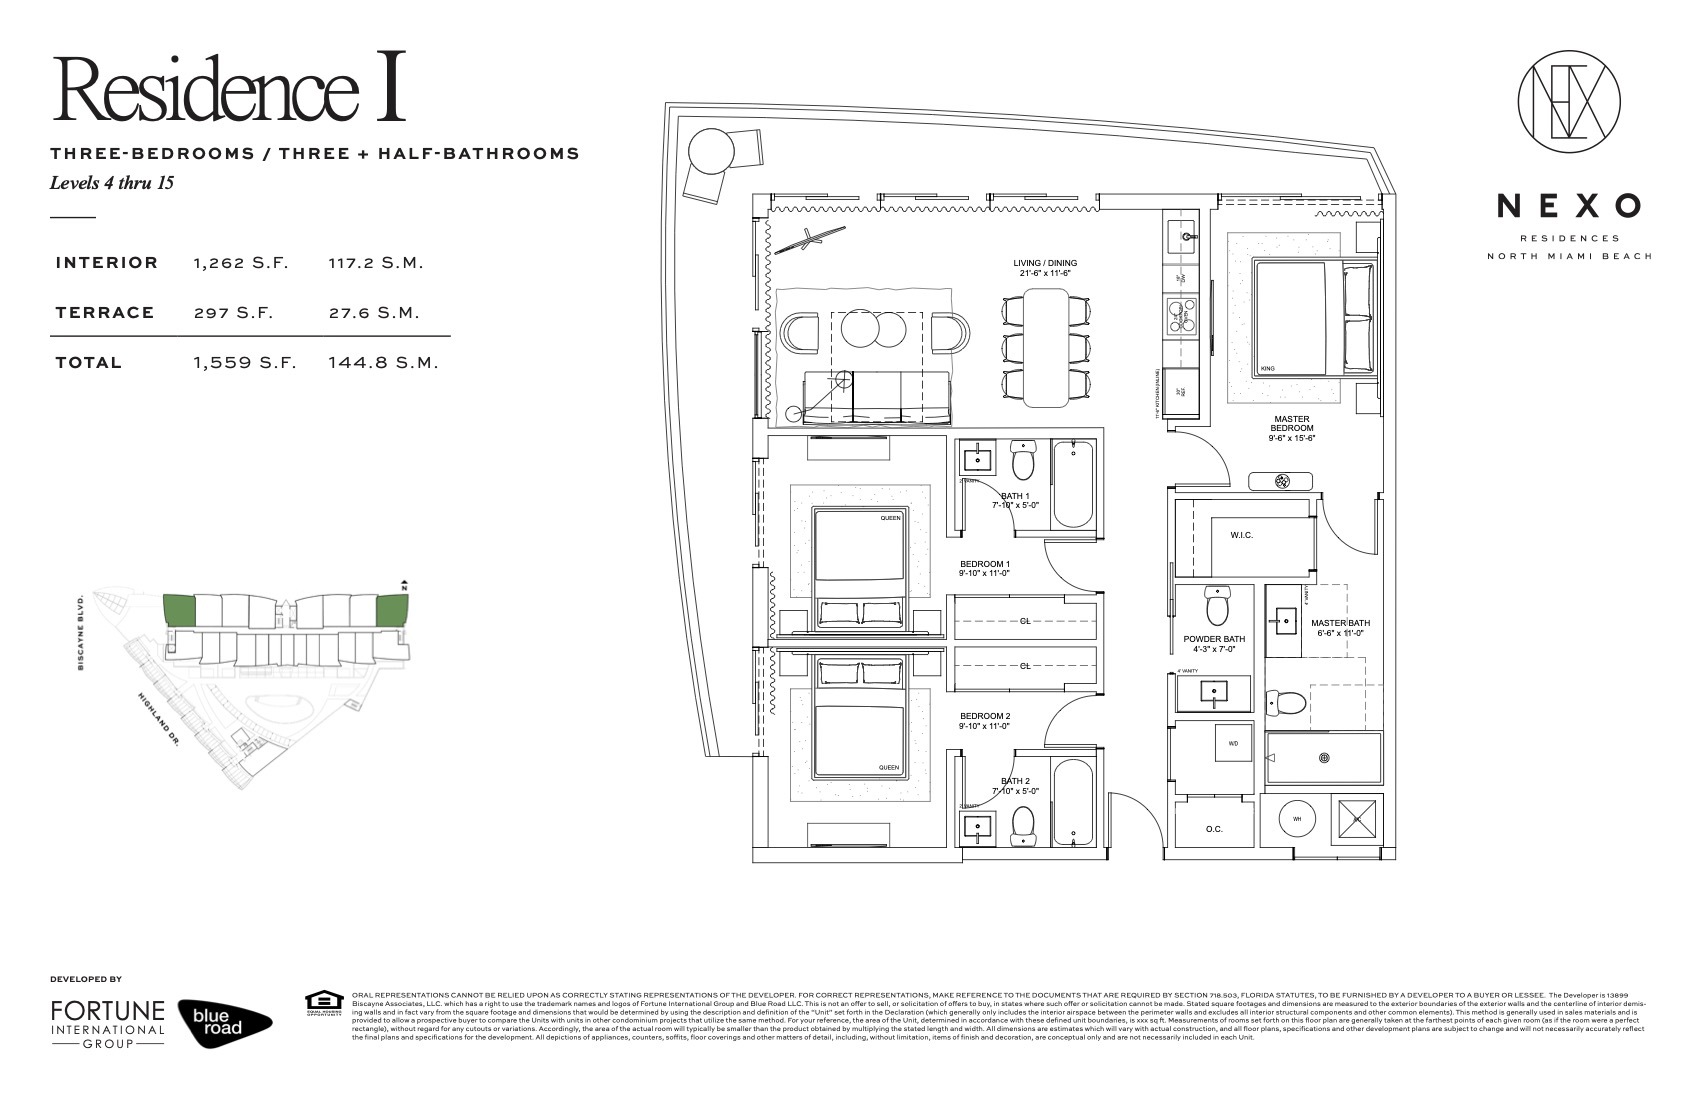 Floor Plan for Nexo Miami Beach Floorplans, Residence I